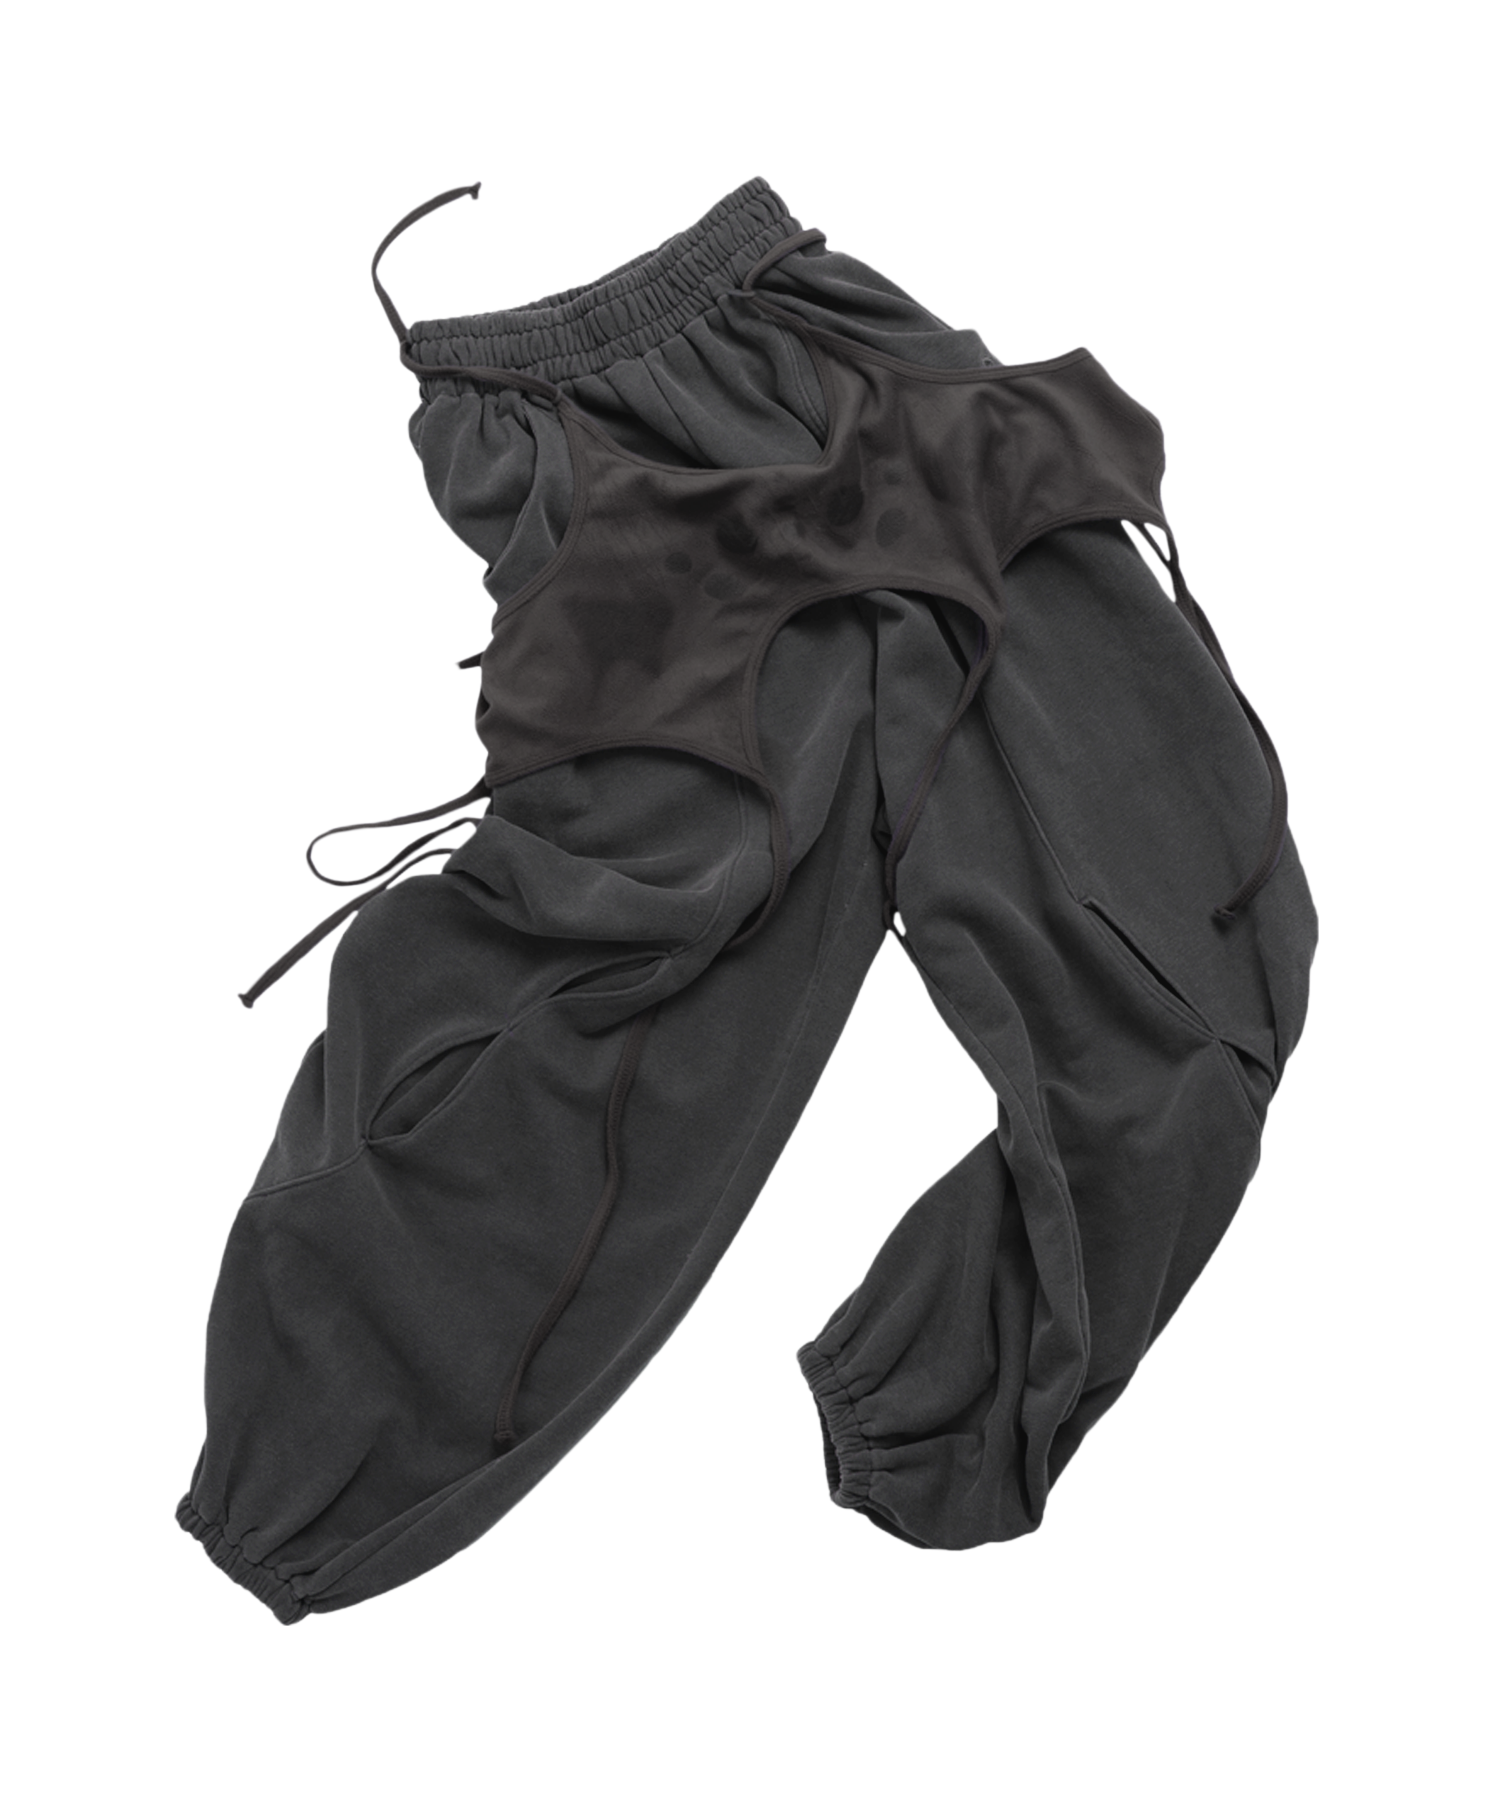 Pigment apron set-up pants / Charcoal